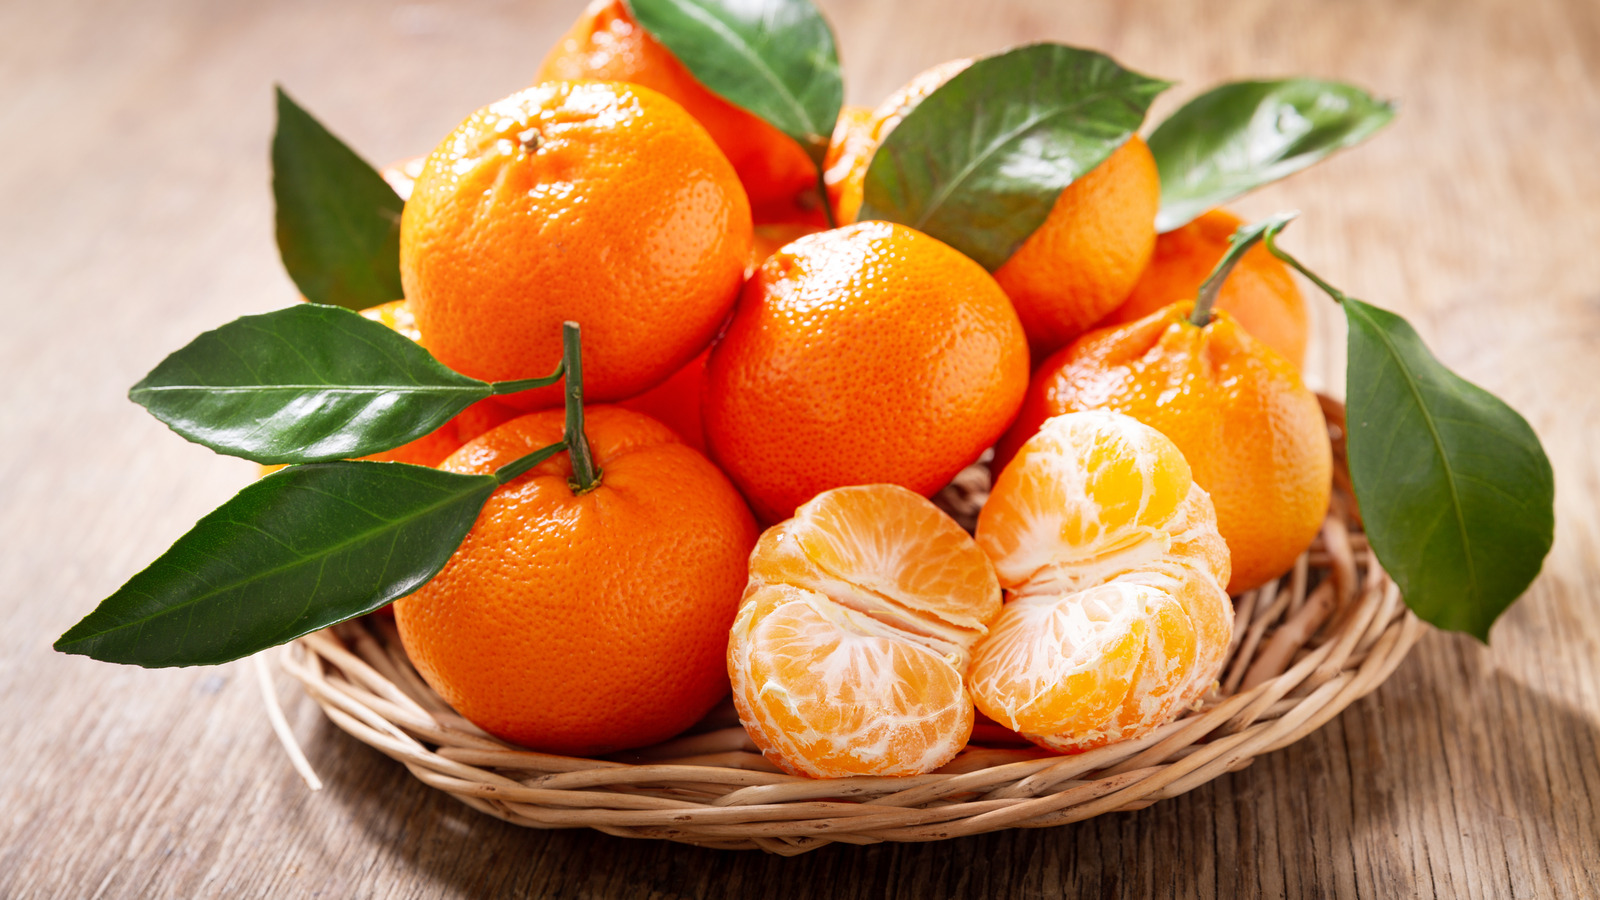 Tangerines & Navel Oranges